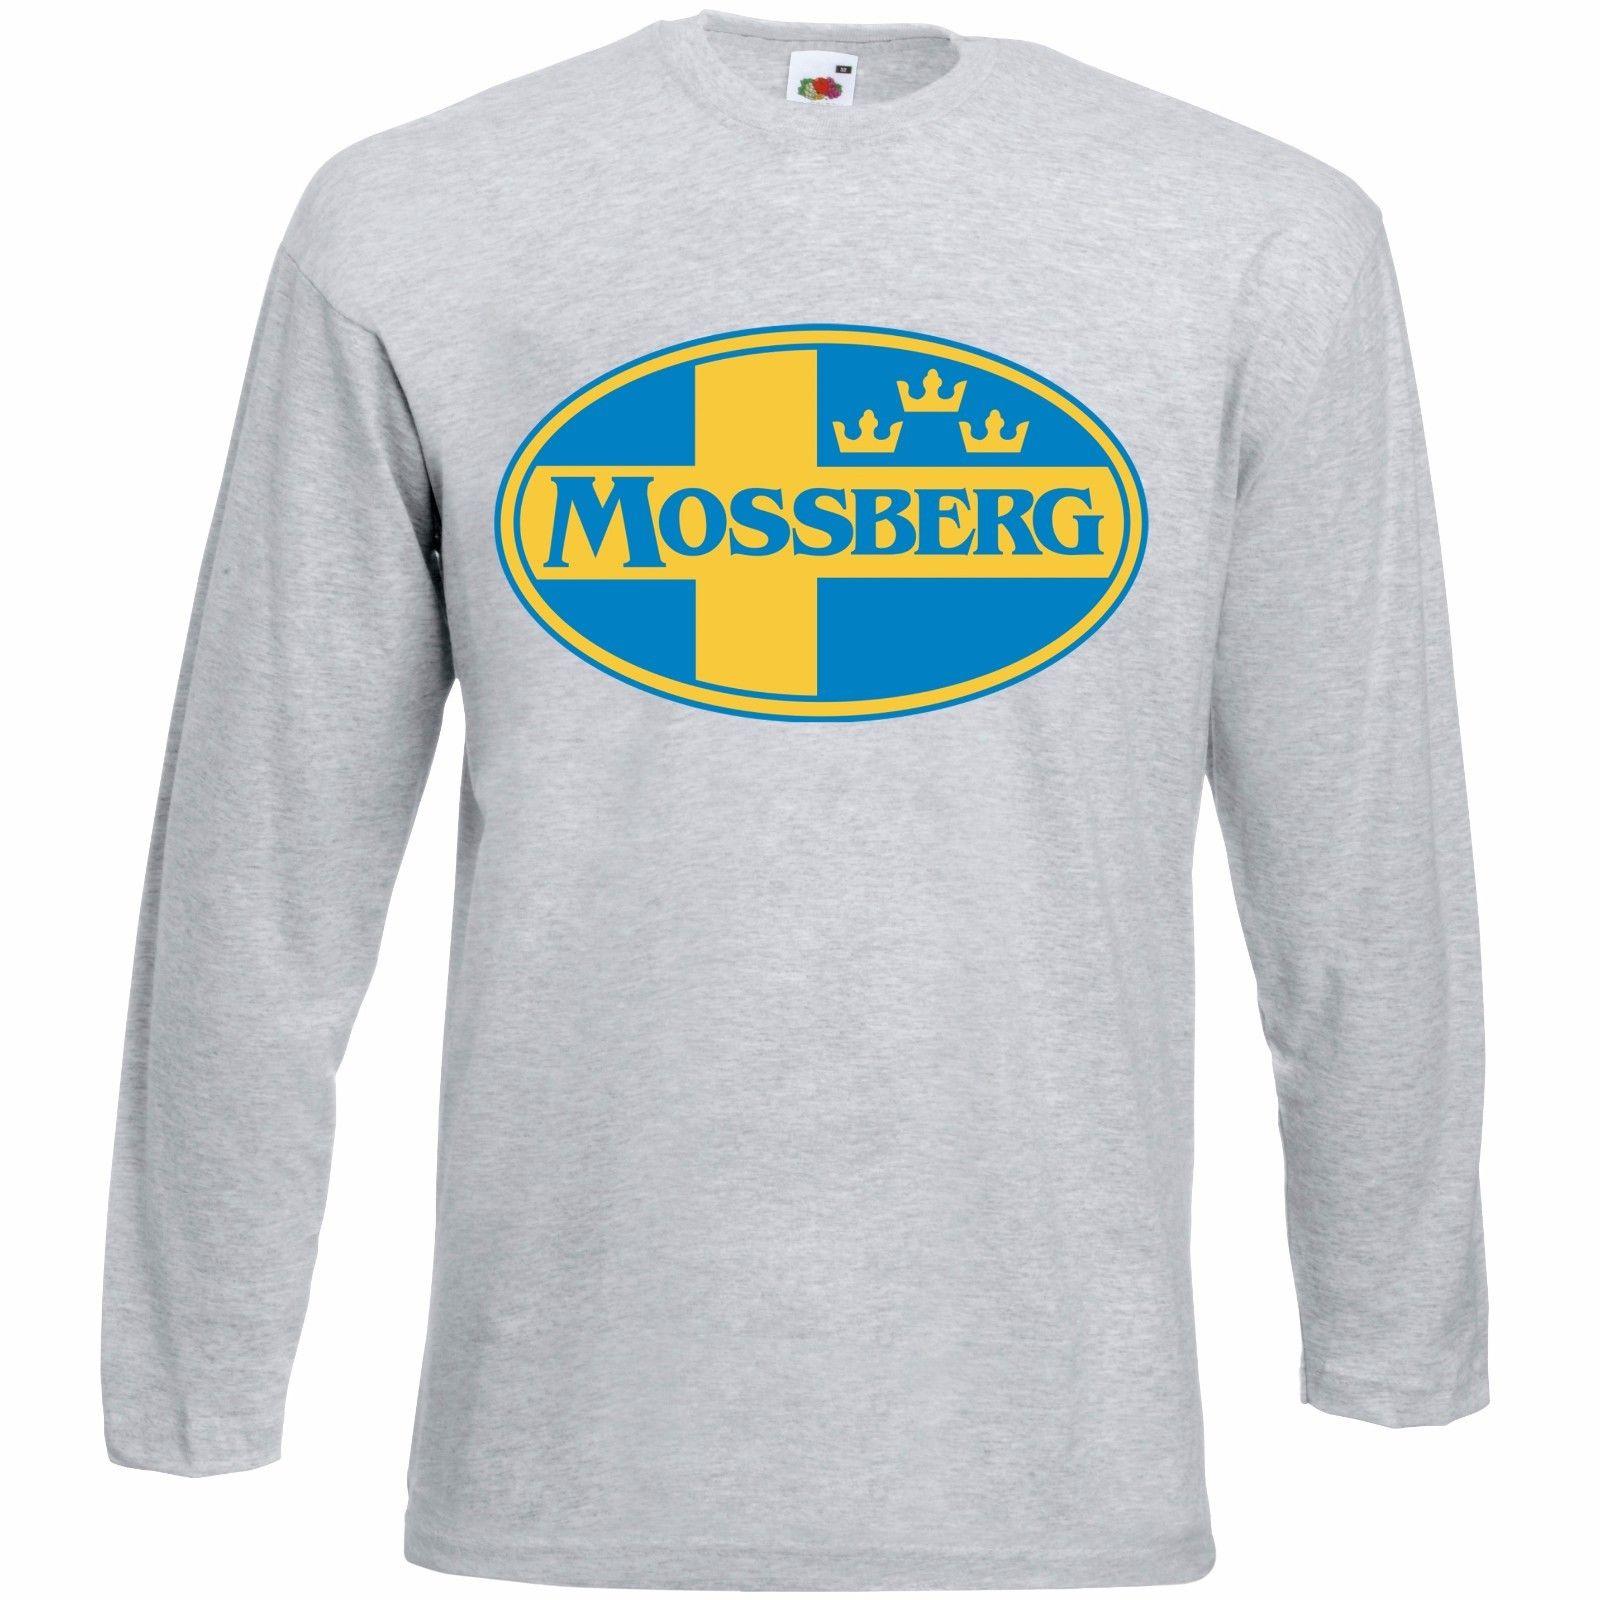 Mossberg Logo - Mossberg LOGO Fruit Of The Loom T Shirt Long Sleeve Online Shopping